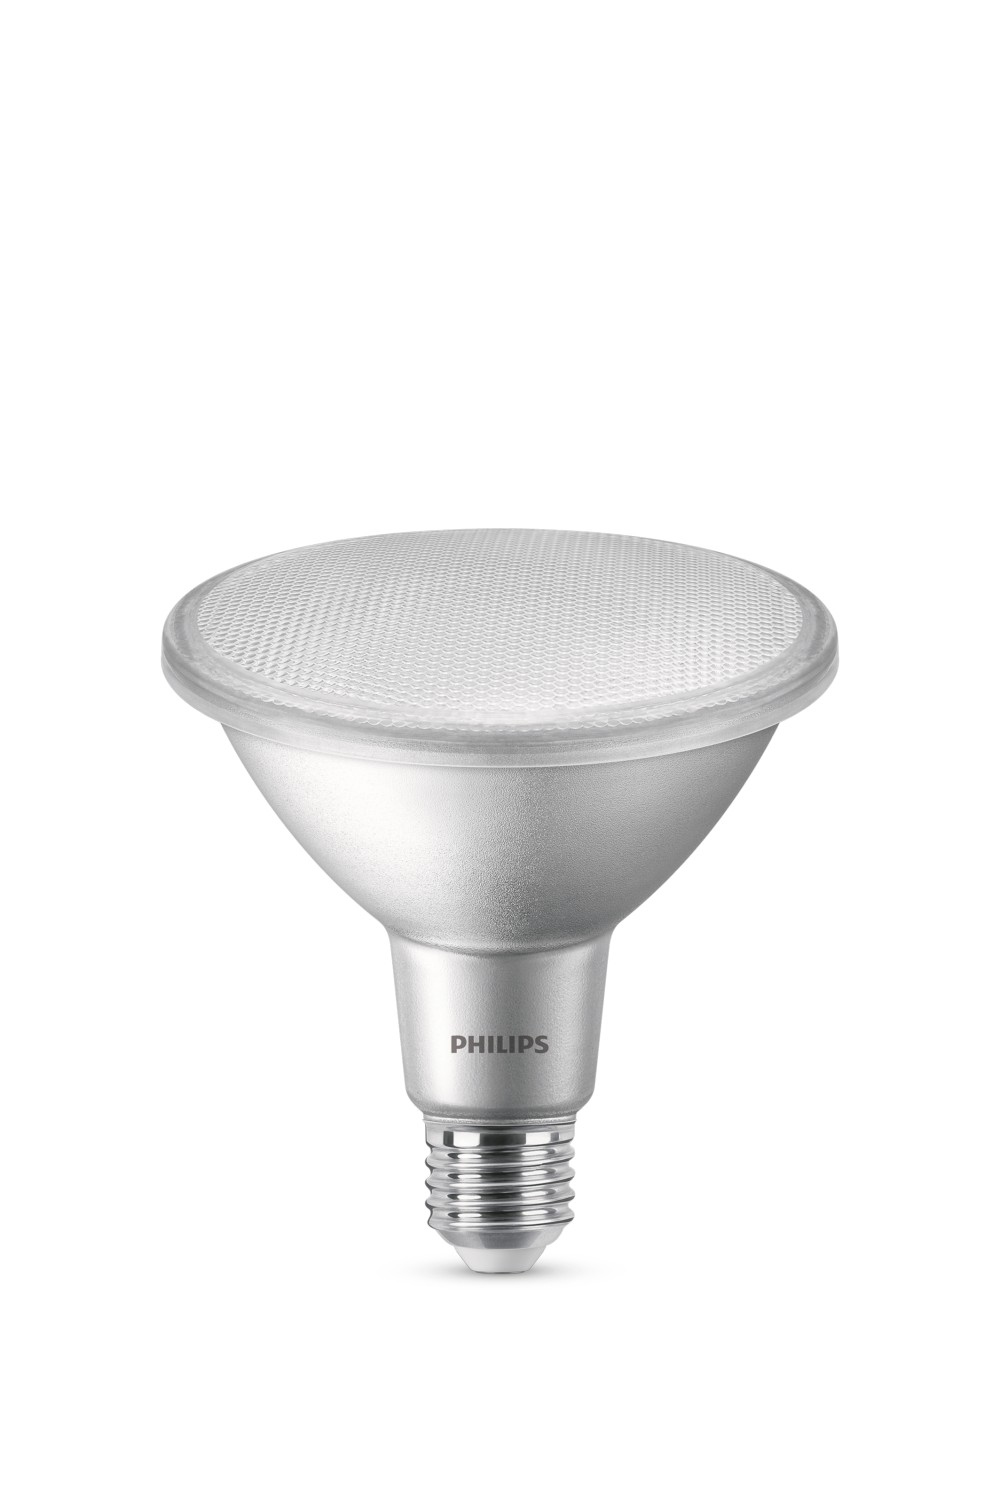 Philips LEDspot Reflektorlampe E27 VLE D 13 Watt 927 PAR38 25 Grad